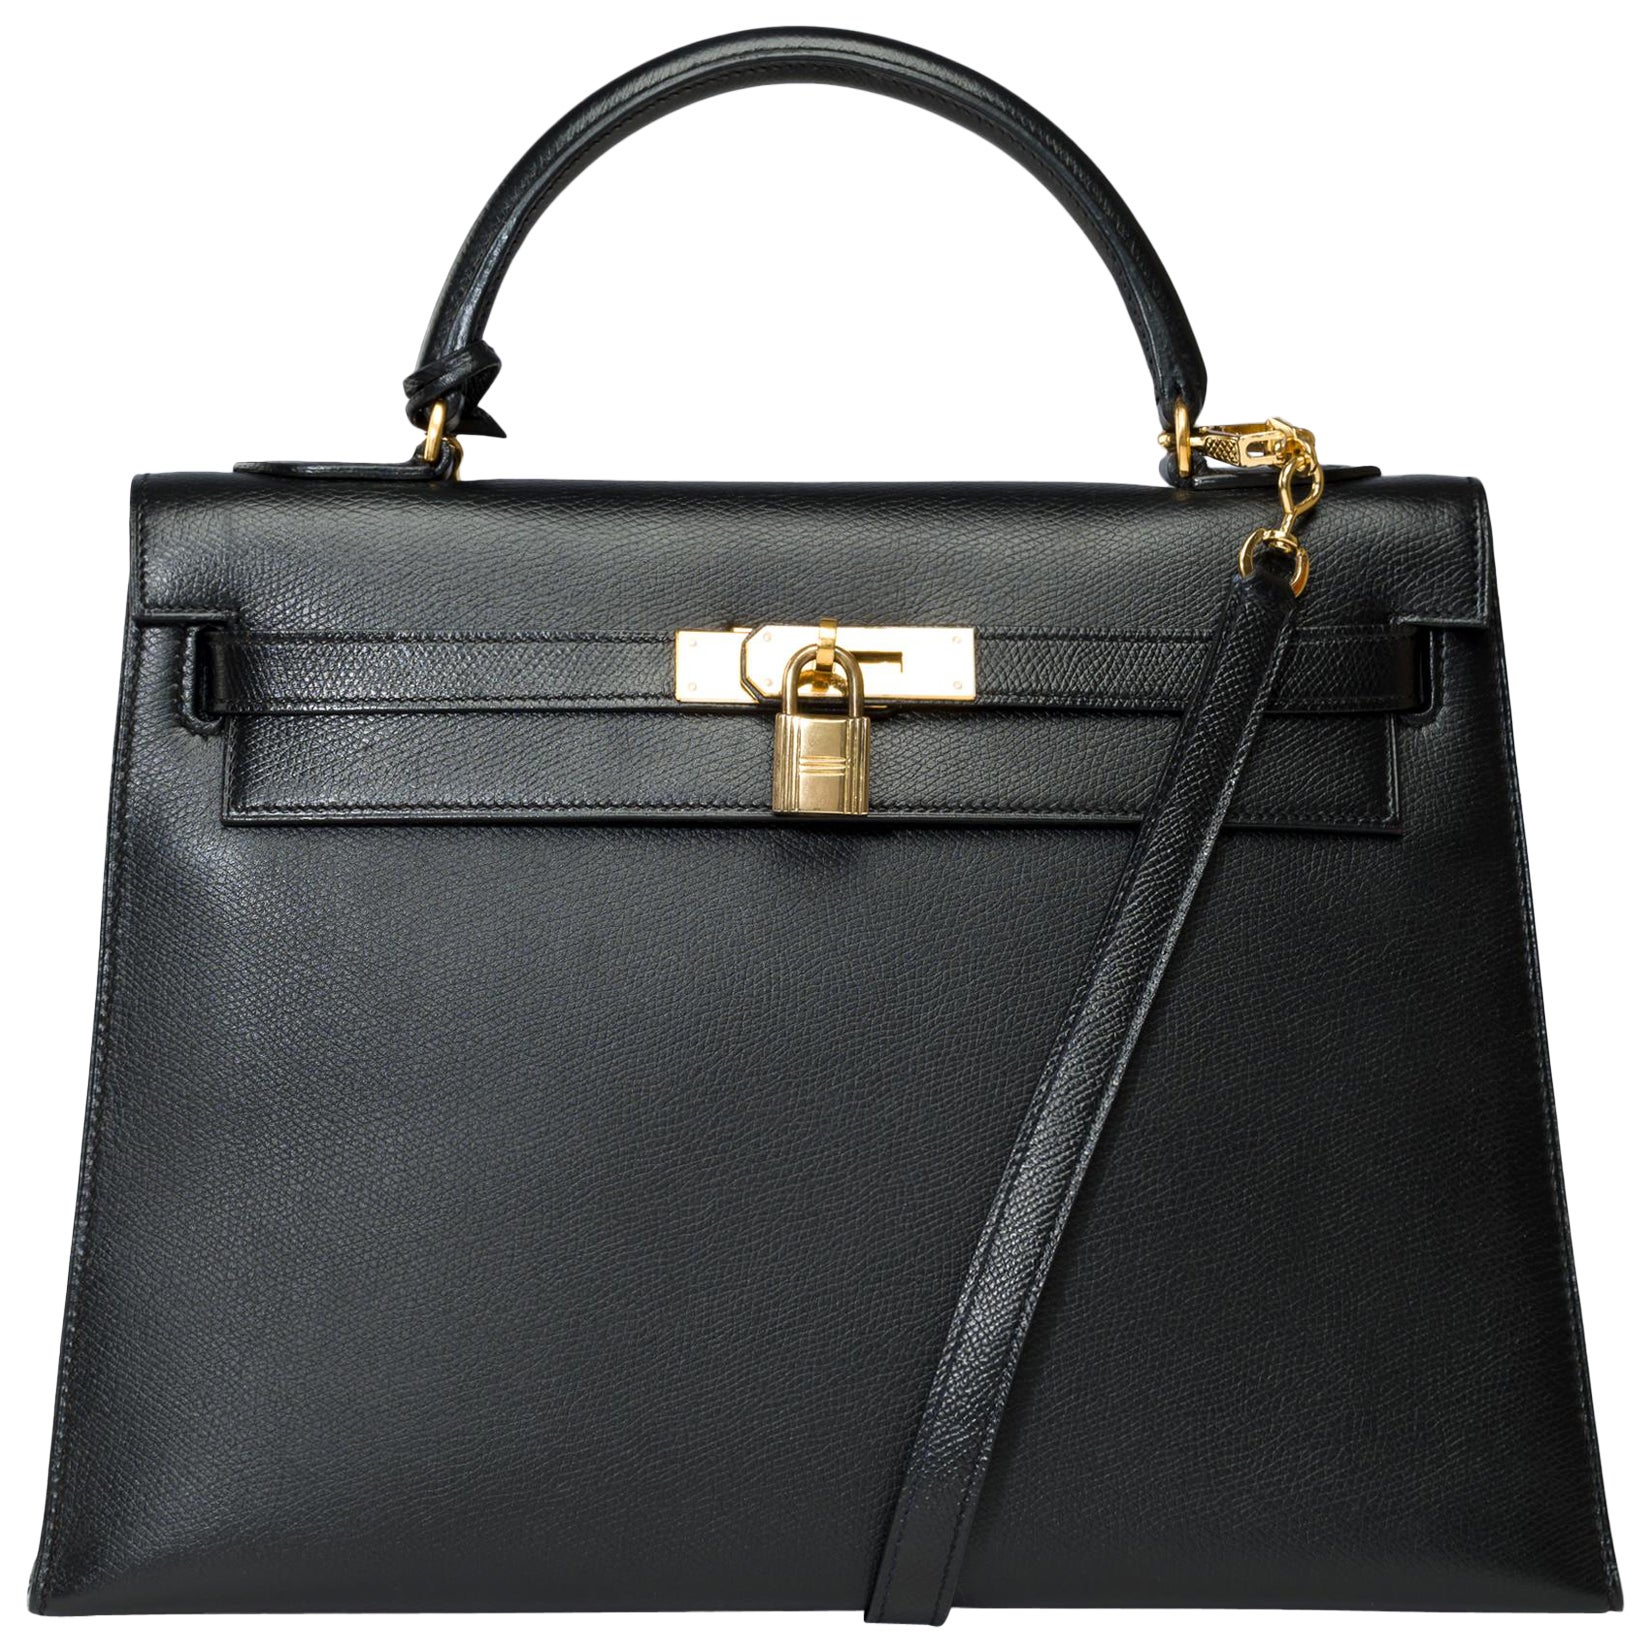 Vintage Hermès Kelly 32 sellier handbag strap in Black Courchevel leather, GHW